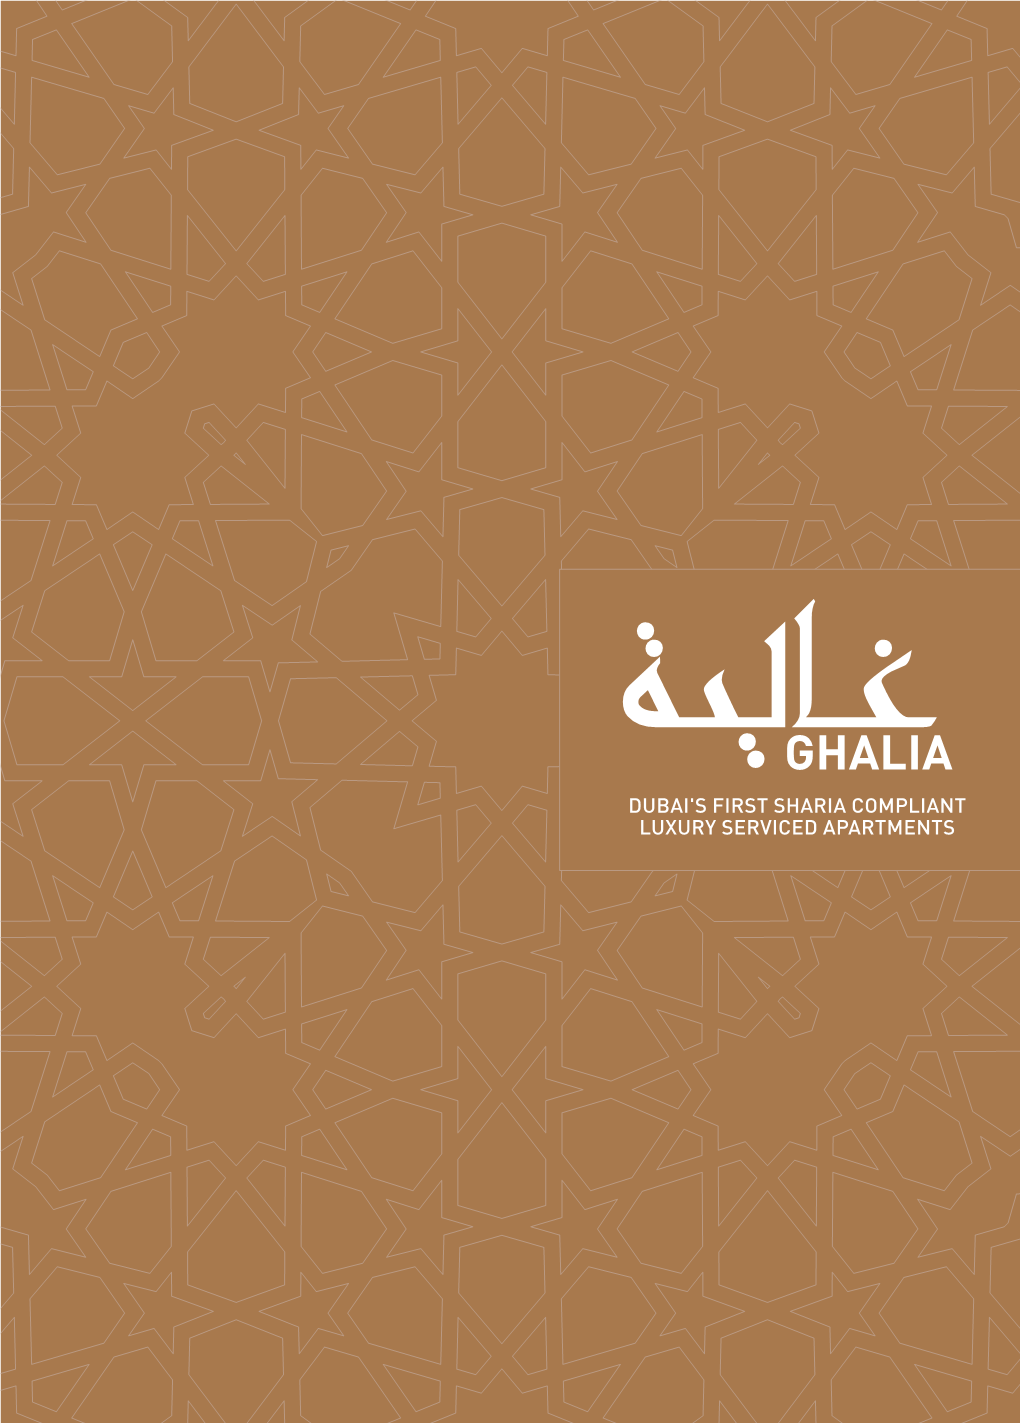 Dubai's First Sharia Compliant Luxury Serviced Apartments